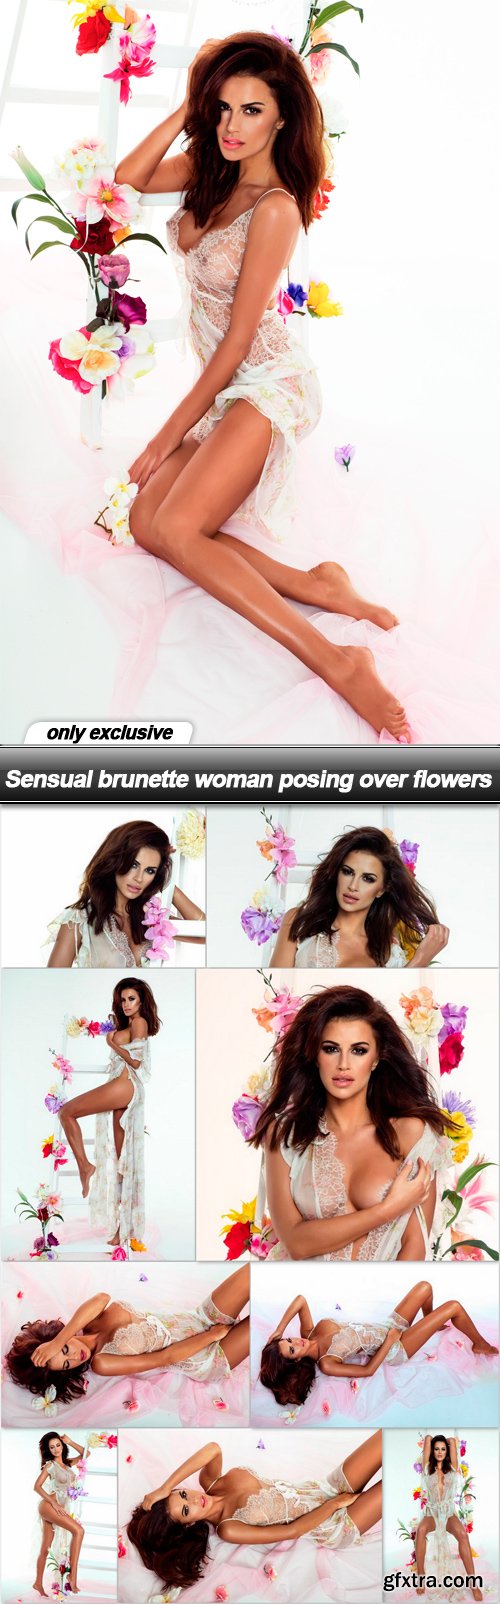 Sensual brunette woman posing over flowers - 10 UHQ JPEG